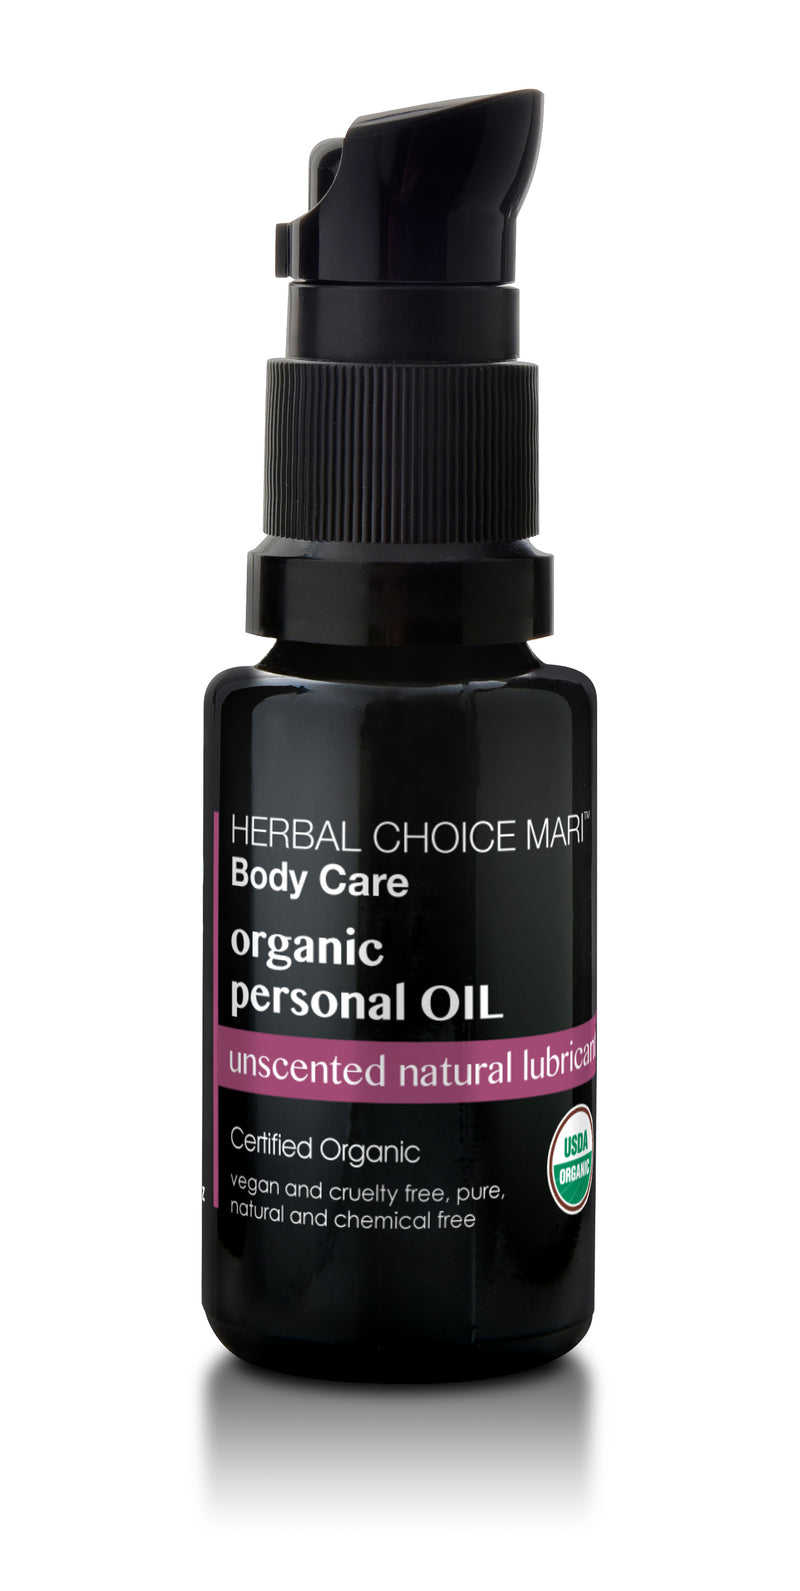 Herbal Choice Mari Organic Personal Lubricant - Herbal Choice Mari Organic Personal Lubricant - Herbal Choice Mari Organic Personal Lubricant